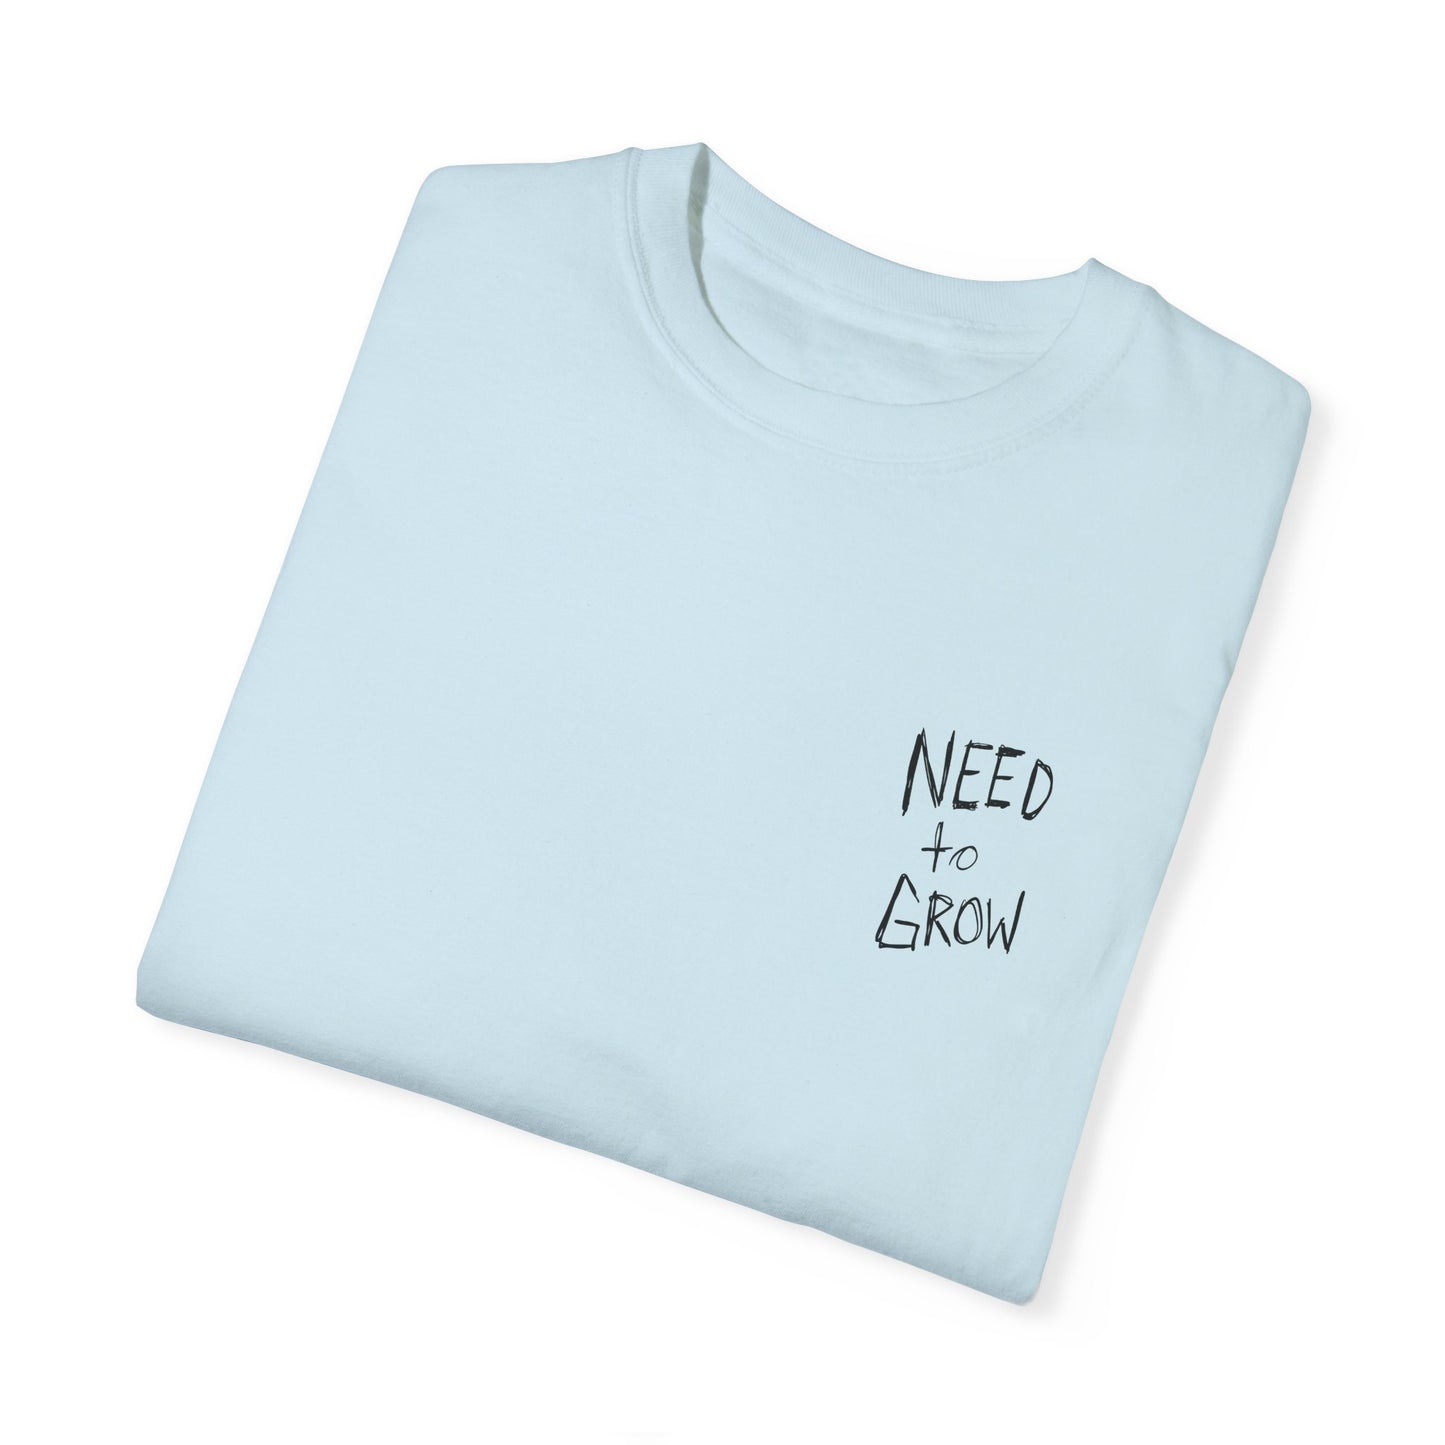 'Need to Grow' T-shirt